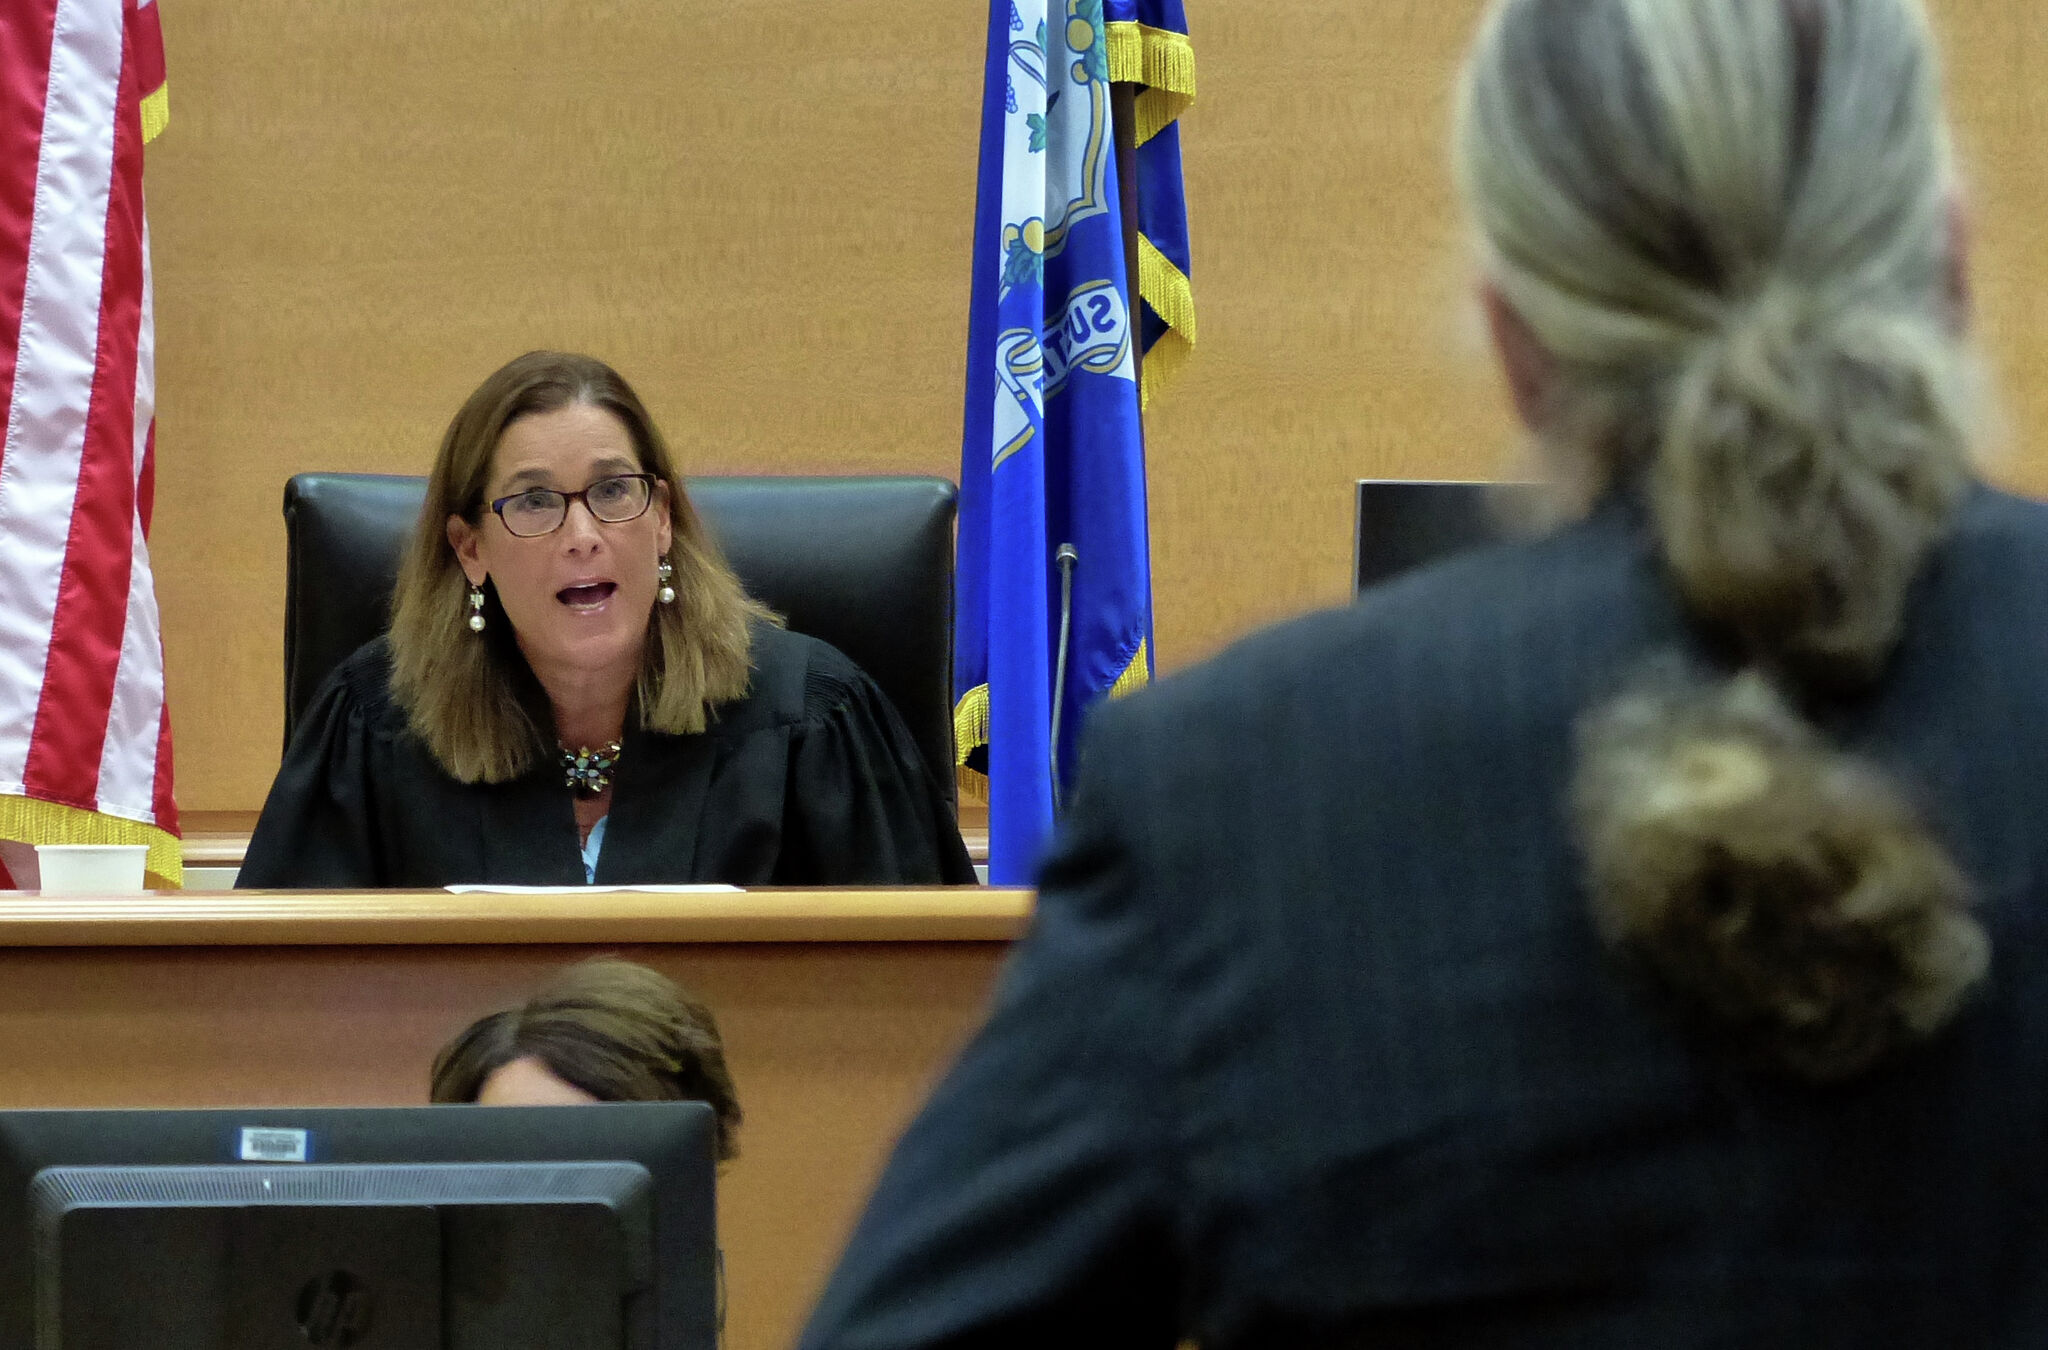 Judge rules against Pattis in effort to delay suspension